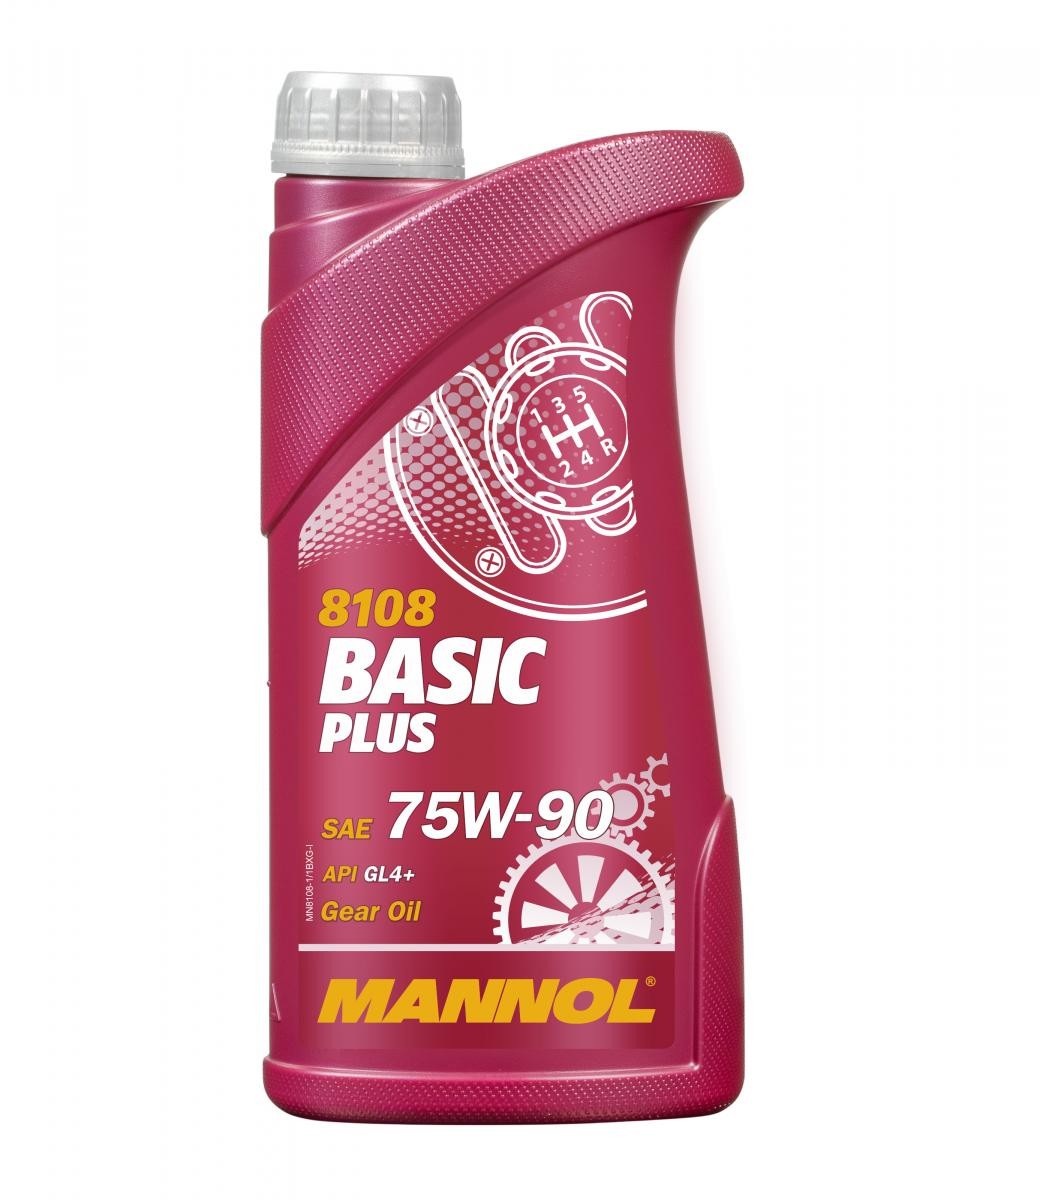 MANNOL BASIC PLUS MN8108-1 Transmission fluid 75W-90, Full Synthetic Oil, Capacity: 1l